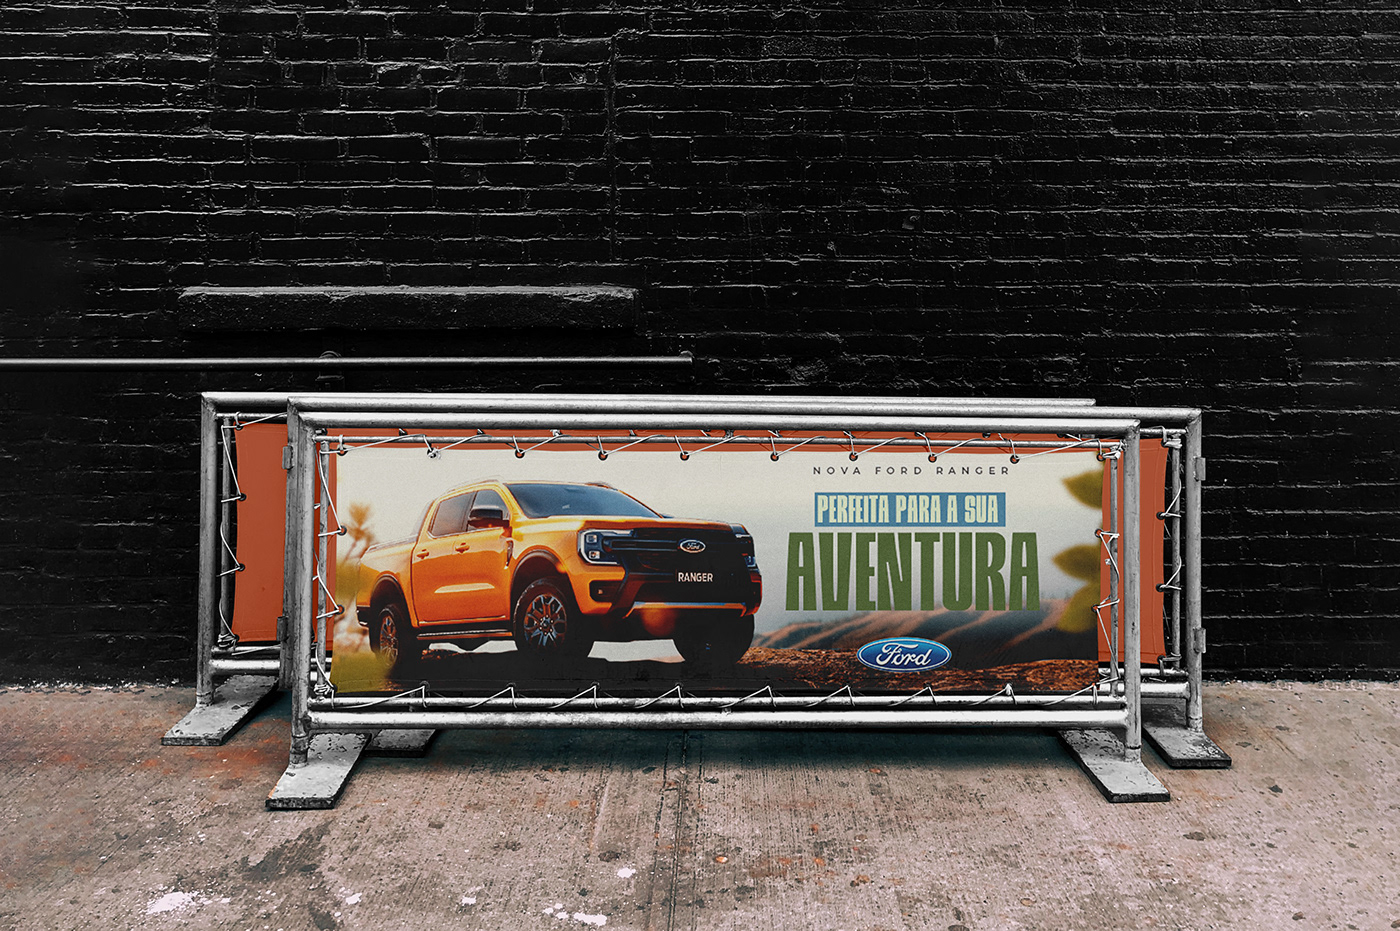 design branding  Advertising  Offroad 4x4 car automotive   Vehicle Ford ranger